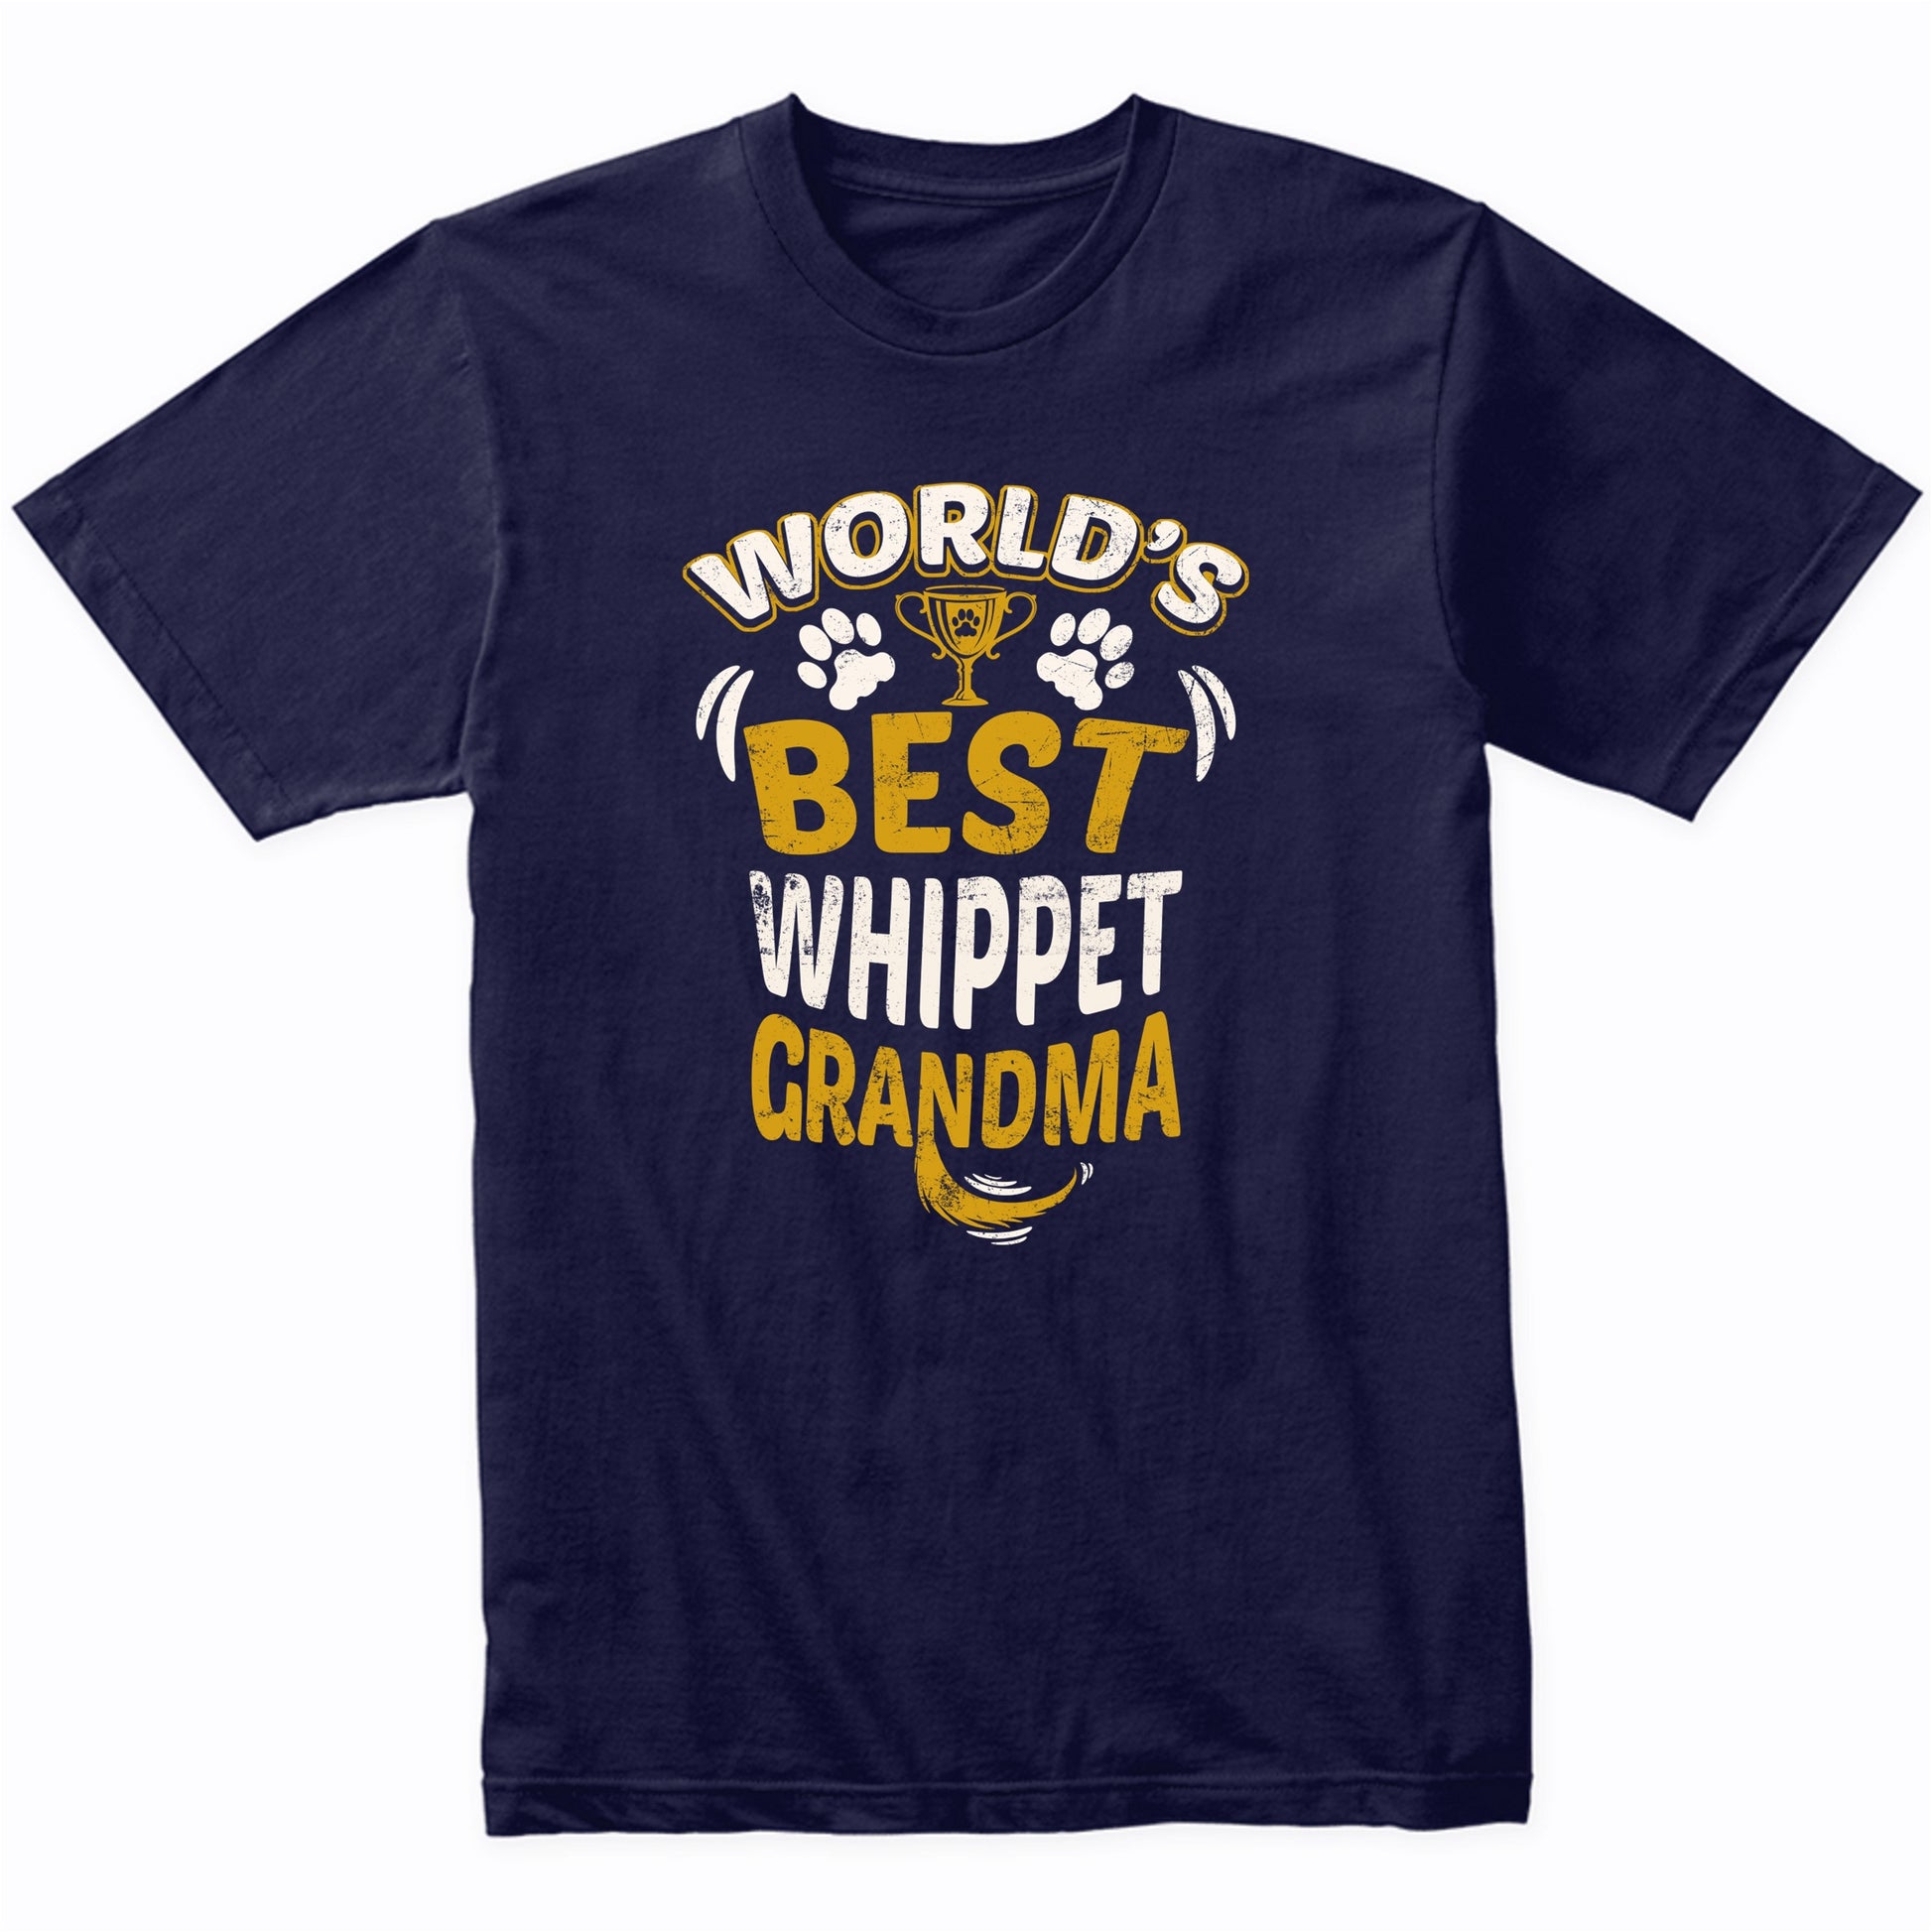 World's Best Whippet Grandma Graphic T-Shirt